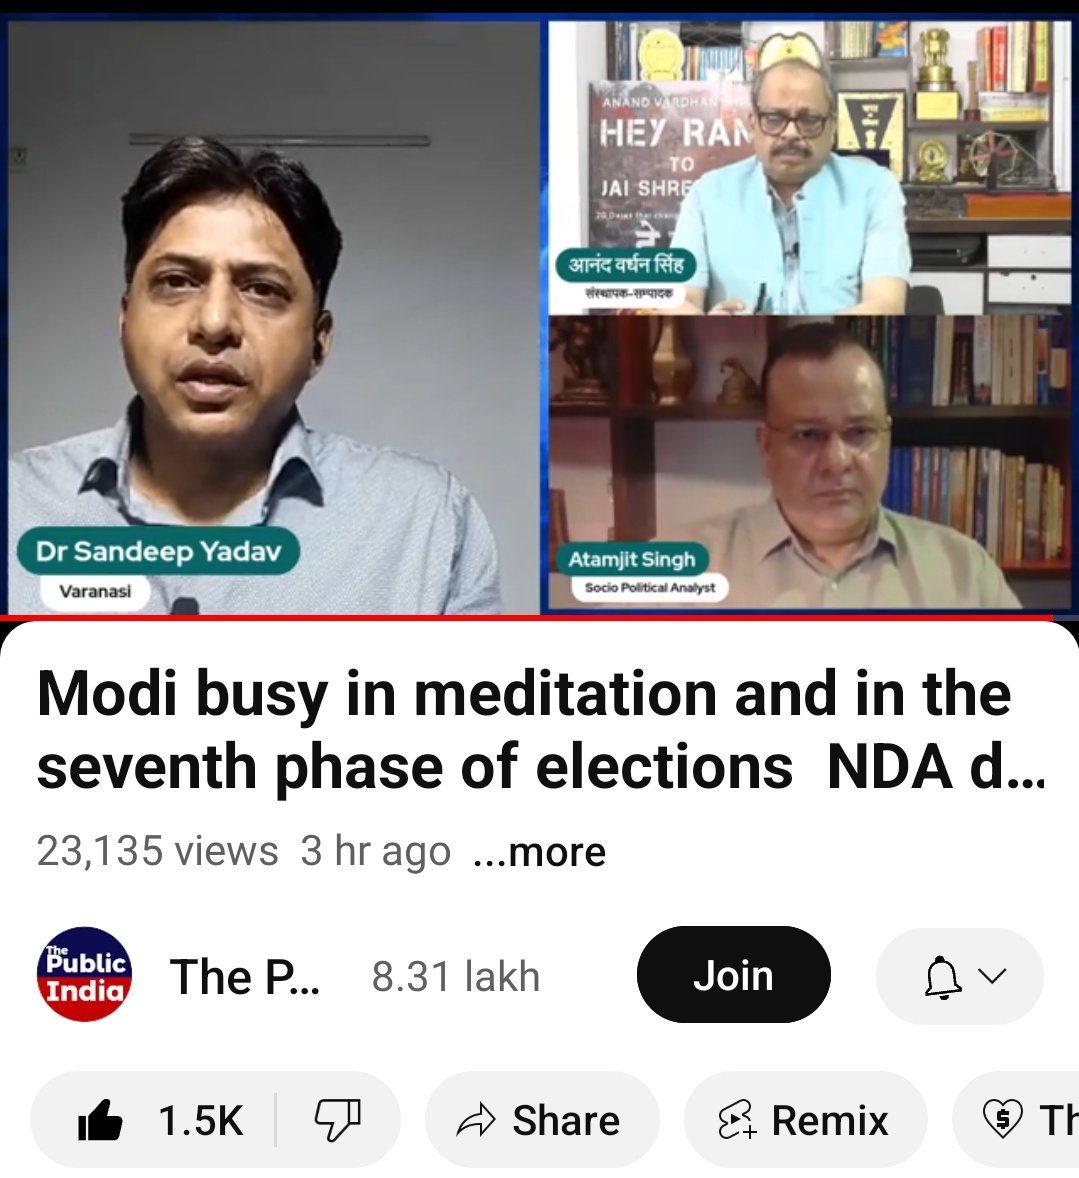 Listen to my views on The Public India on Modi's meditation. youtube.com/live/muf51yqoL…